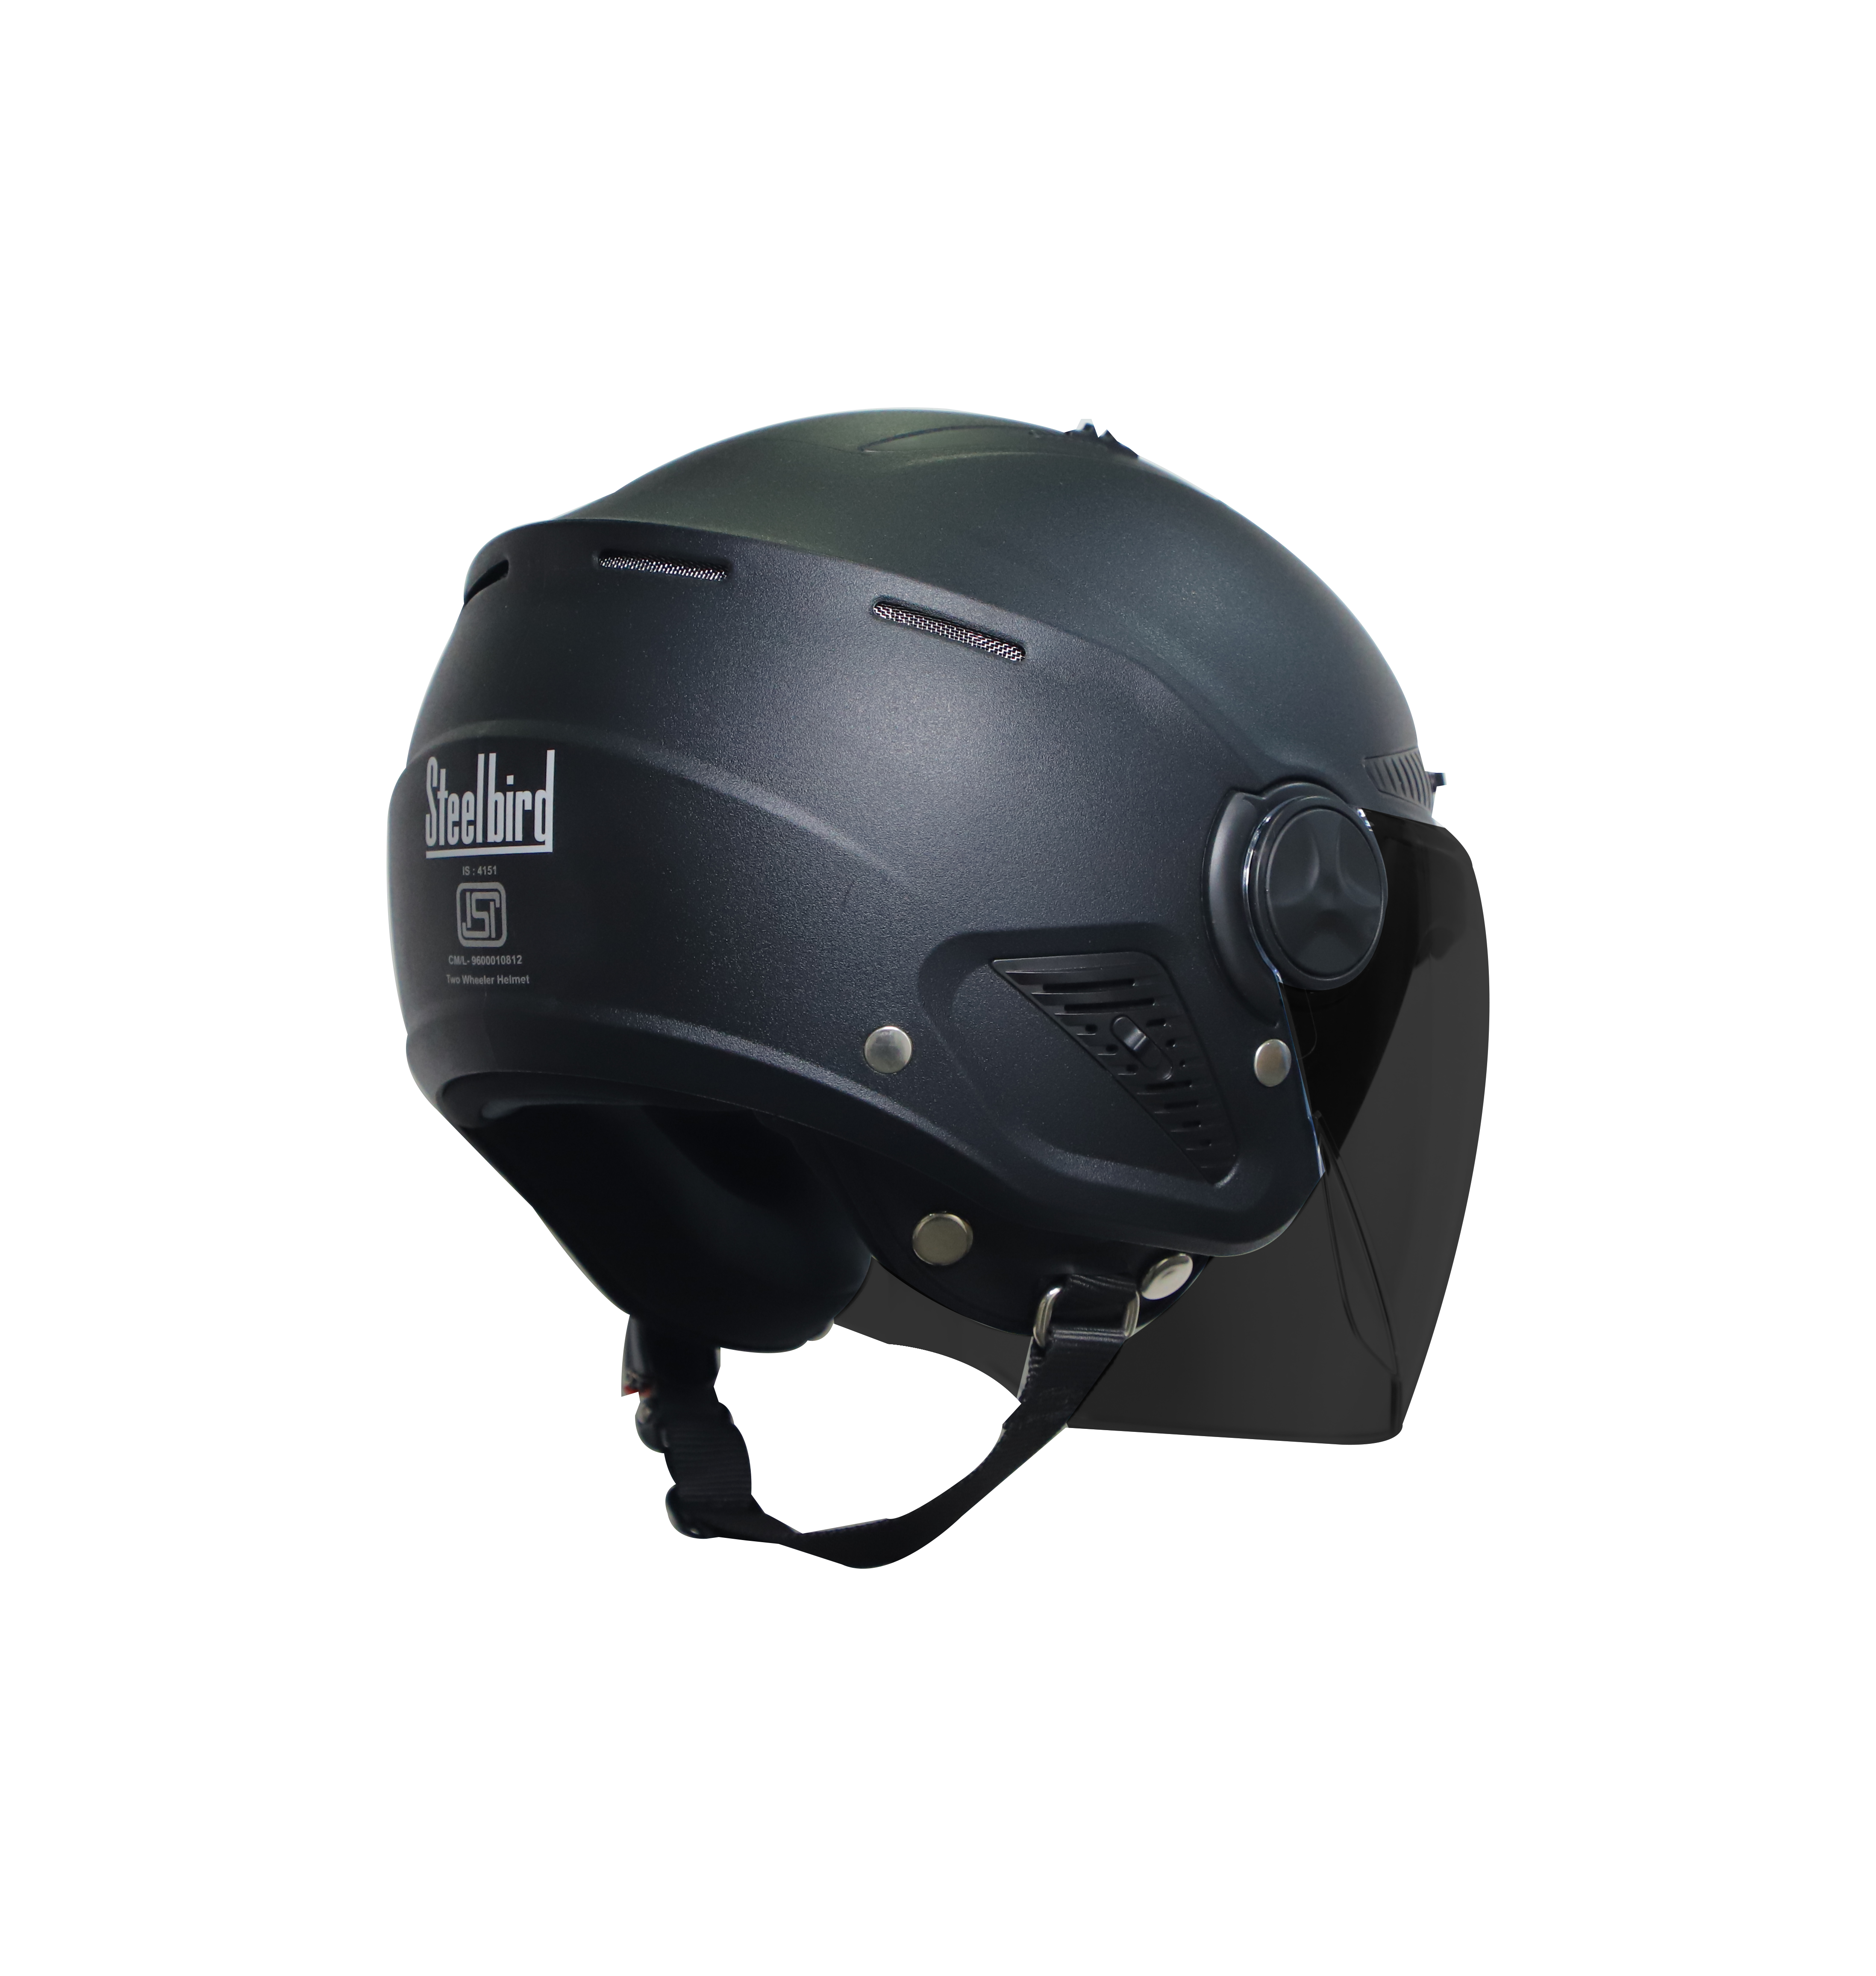 Steelbird SBH-24 Boxx Dashing ISI Certified Open Face Helmet For Men And Women (Black With Smoke Visor)